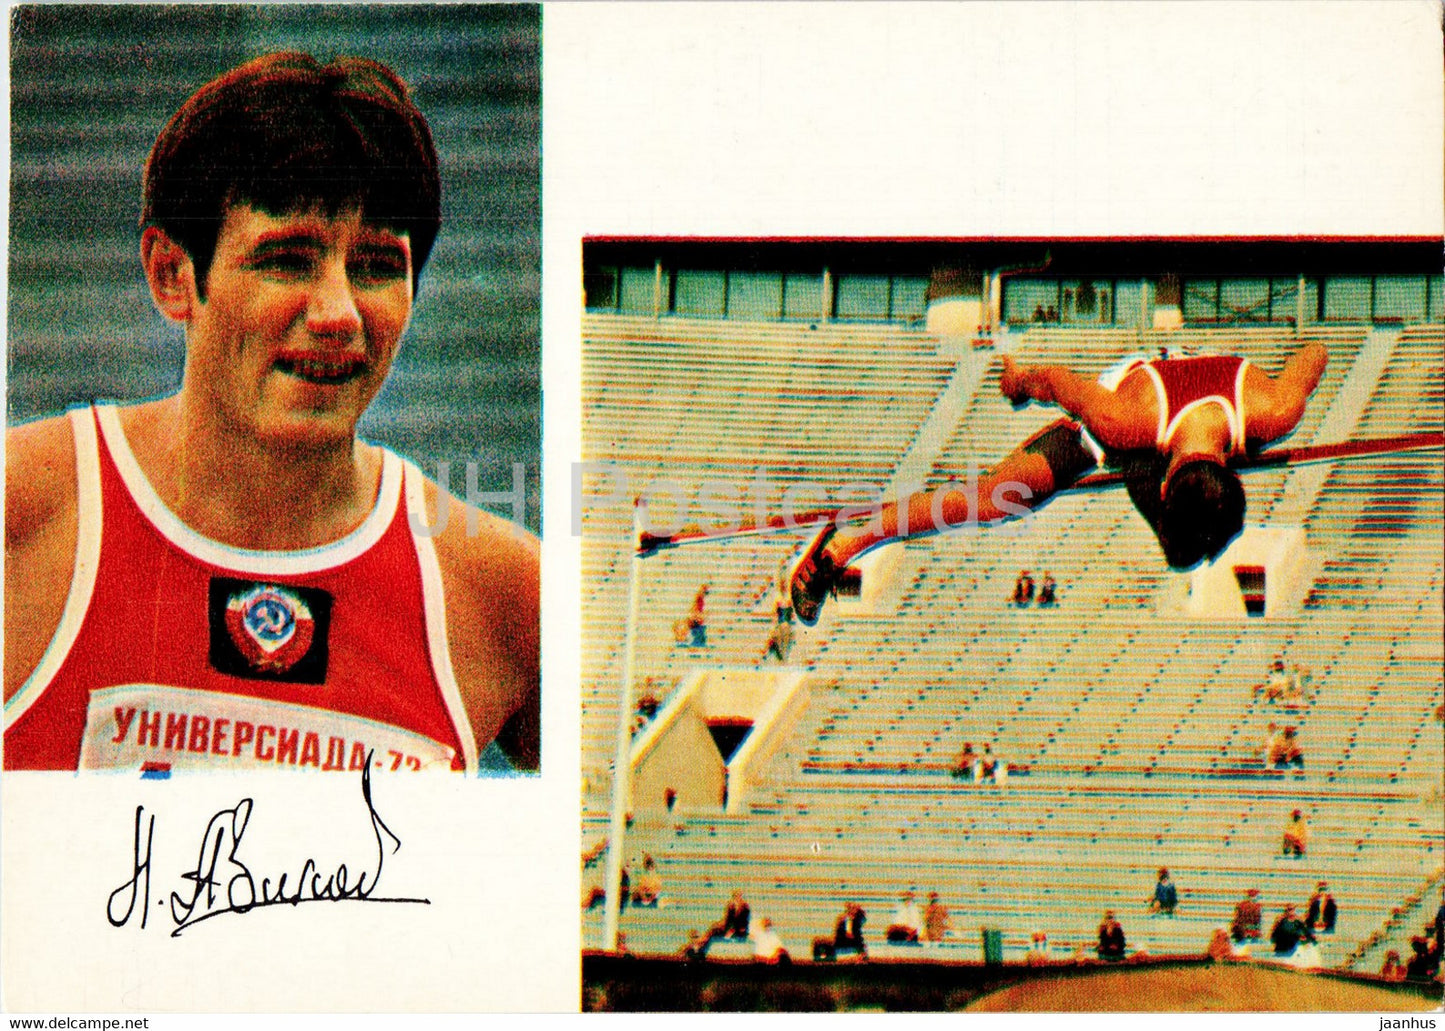 Nikolay Avilov - decathlon - high jump - athletics - Soviet champions - sports - 1974 - Russia USSR - unused - JH Postcards